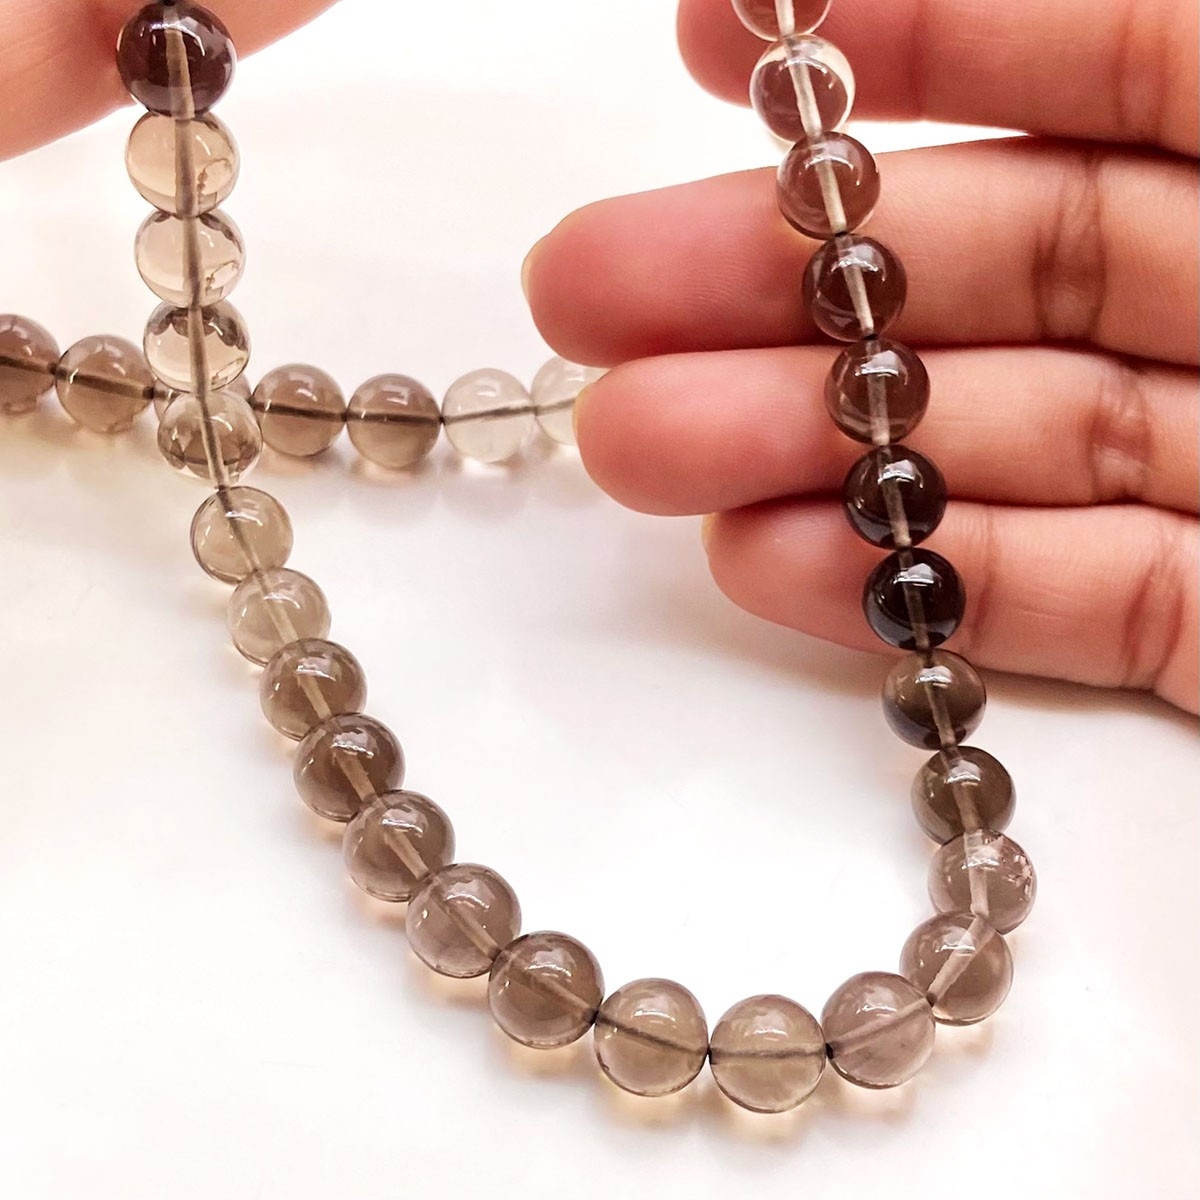 Crystal Quartz Beads, 4mm 6mm 8mm 10mm Round Faceted, Gem Stone Beads,  Natural Gem Beads, Faceted Crystal Quartz Stone, Full Strand, CQZ10X0 